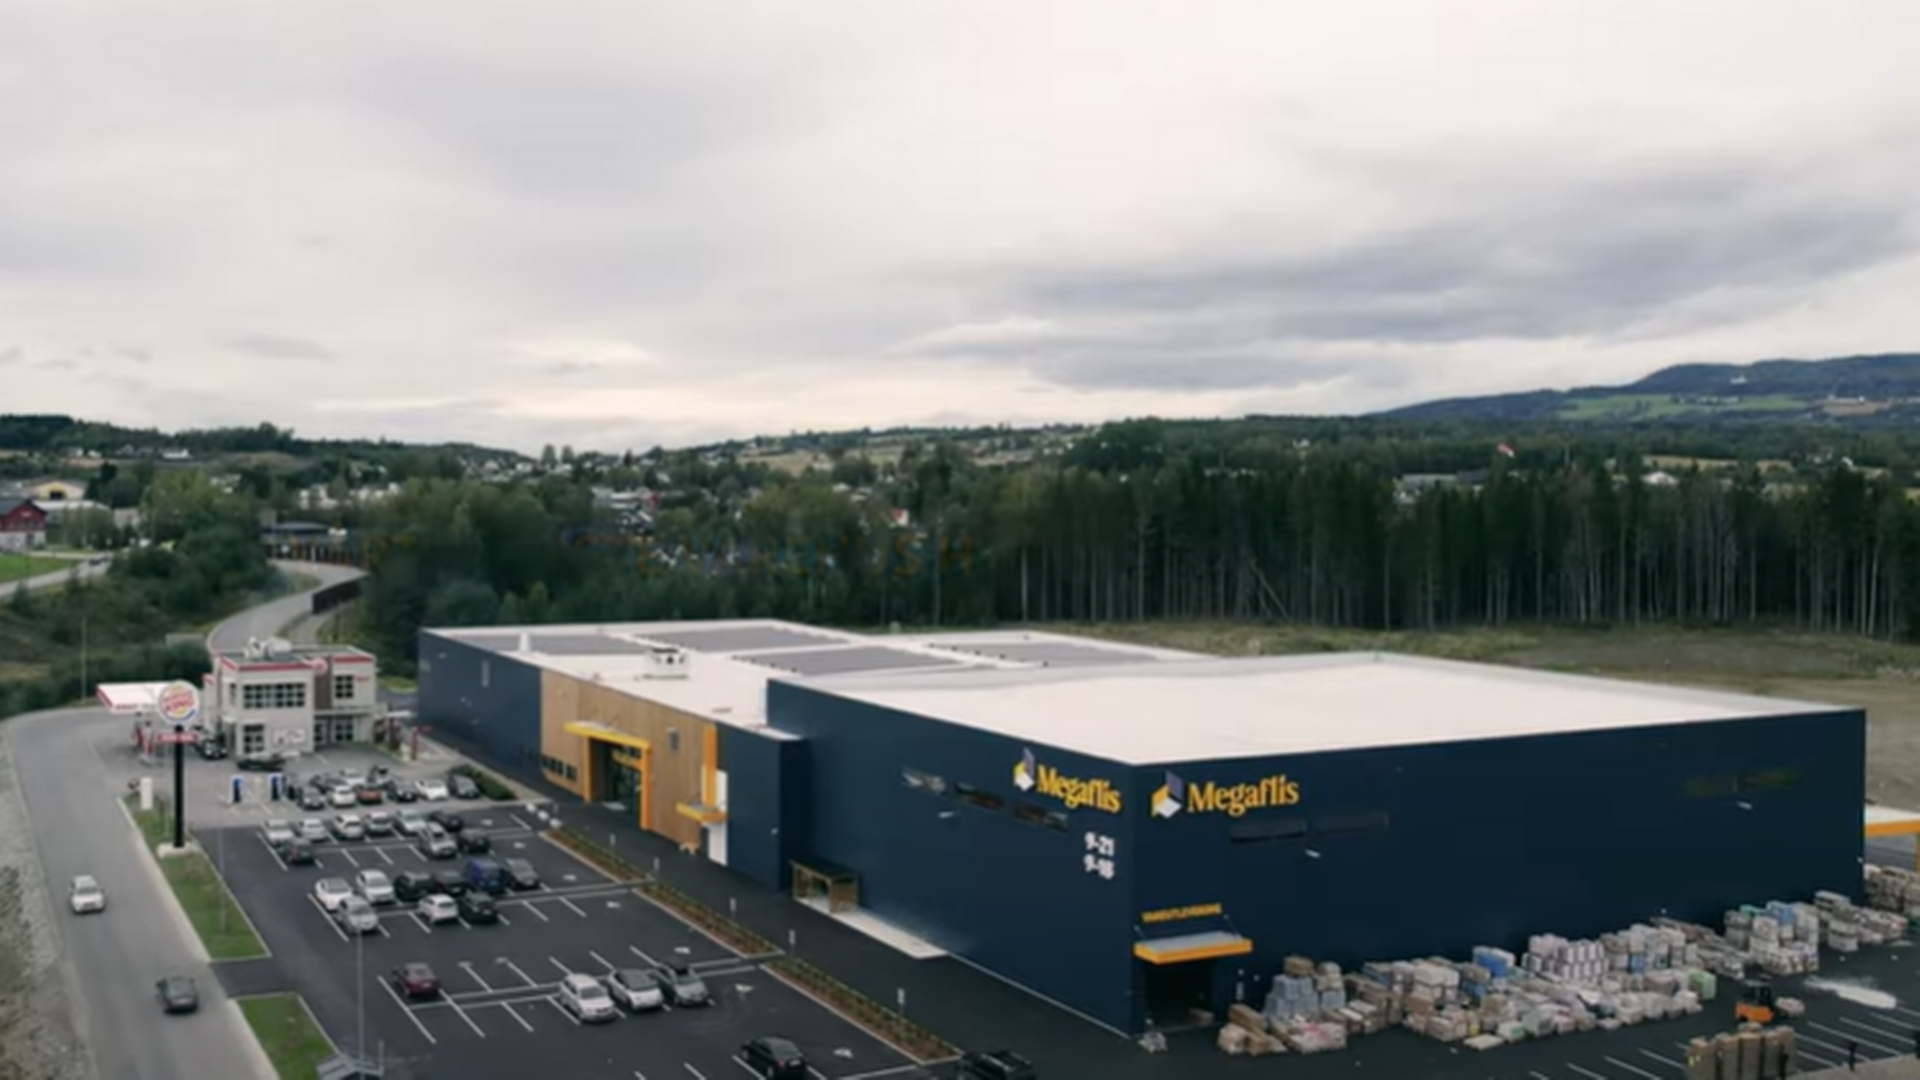 STØRSTE I SITT SLAG: Megaflis-butikken i Nydal i Ringsaker blir den største butikken i sitt slag i Norge. | Foto: Skjermdump Megaflis/Youtube